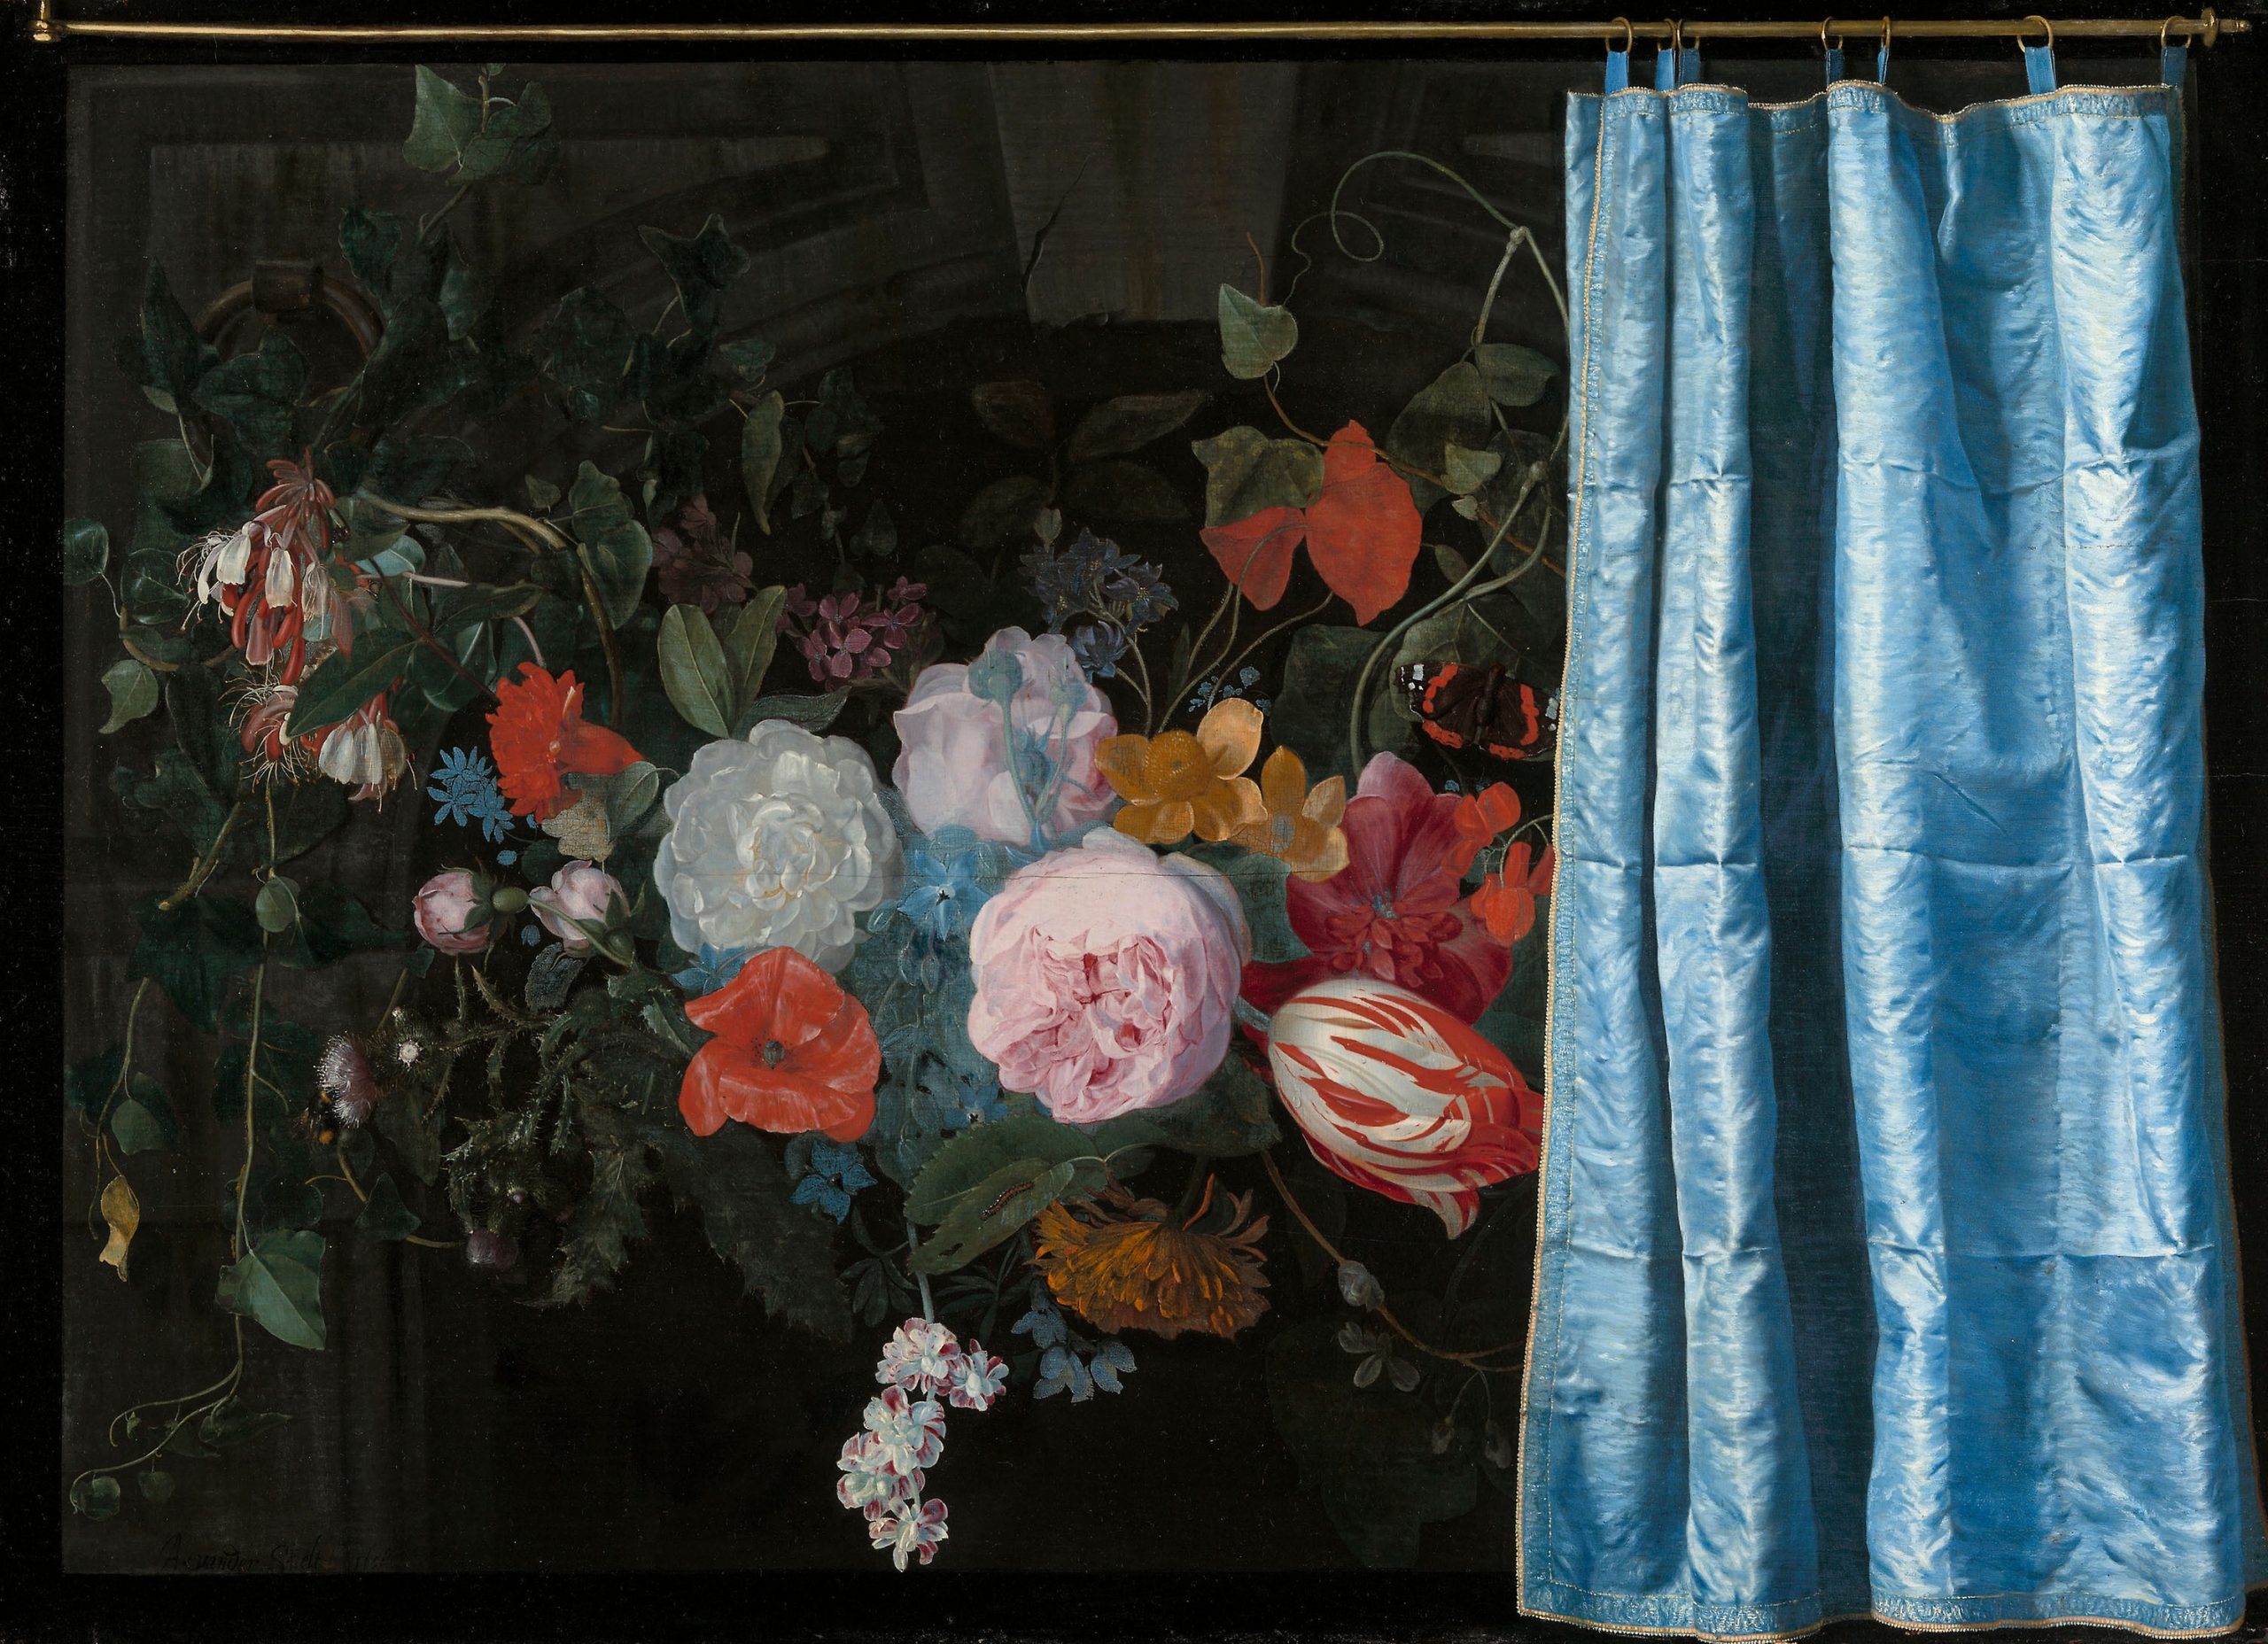 Adriaen van der Spelt
"Still Life with a Flower Garland and a Curtain", 1658
Oil on canvas, 18x25 inches /  47x64 cm